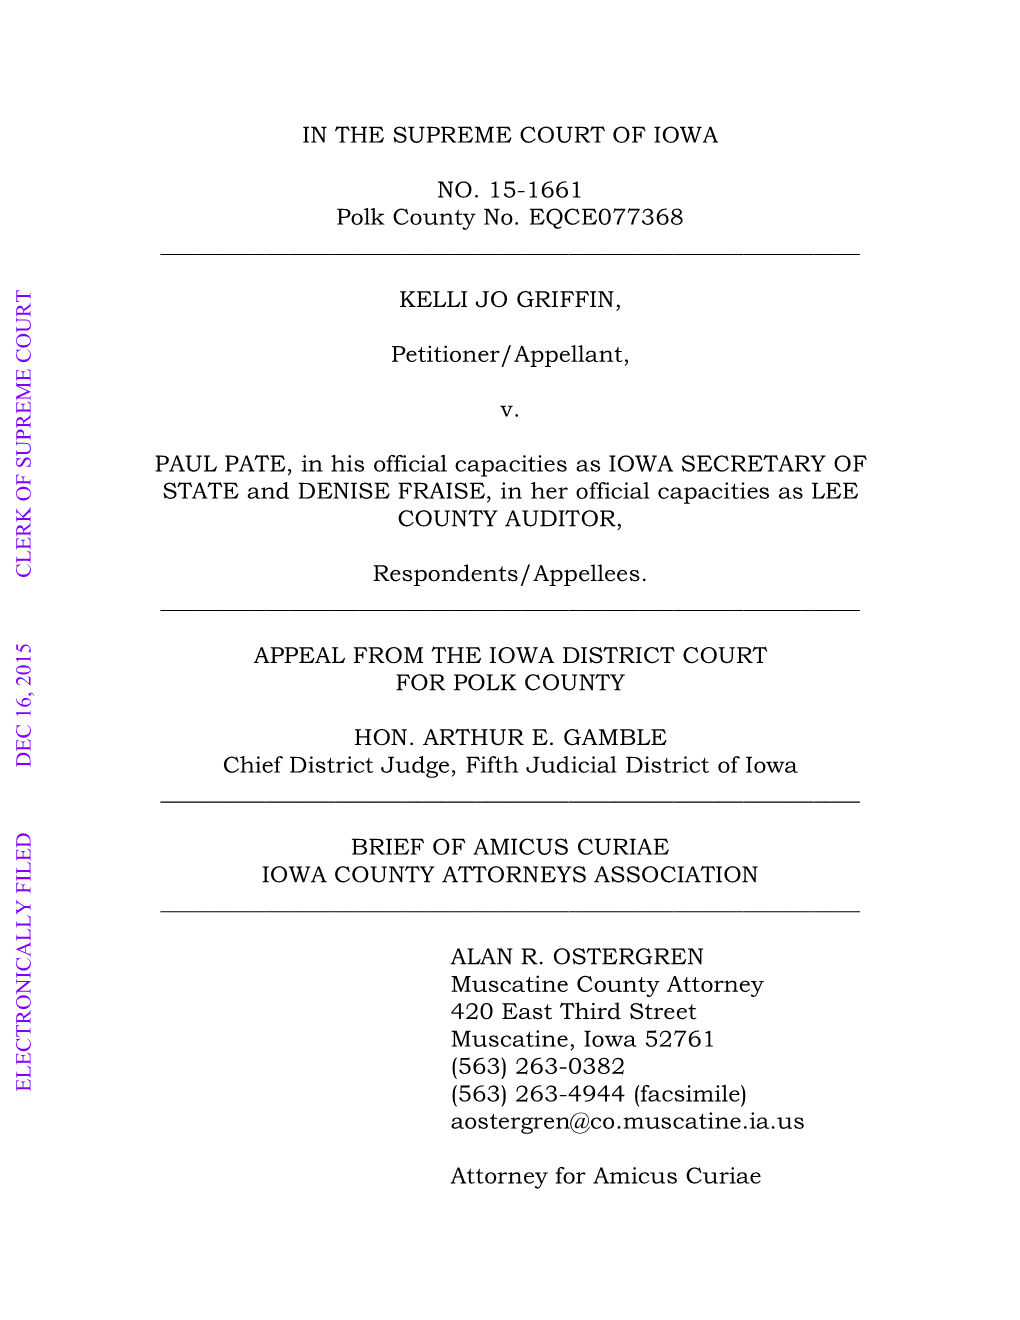 Iowa County Attorneys Association Amicus Brief